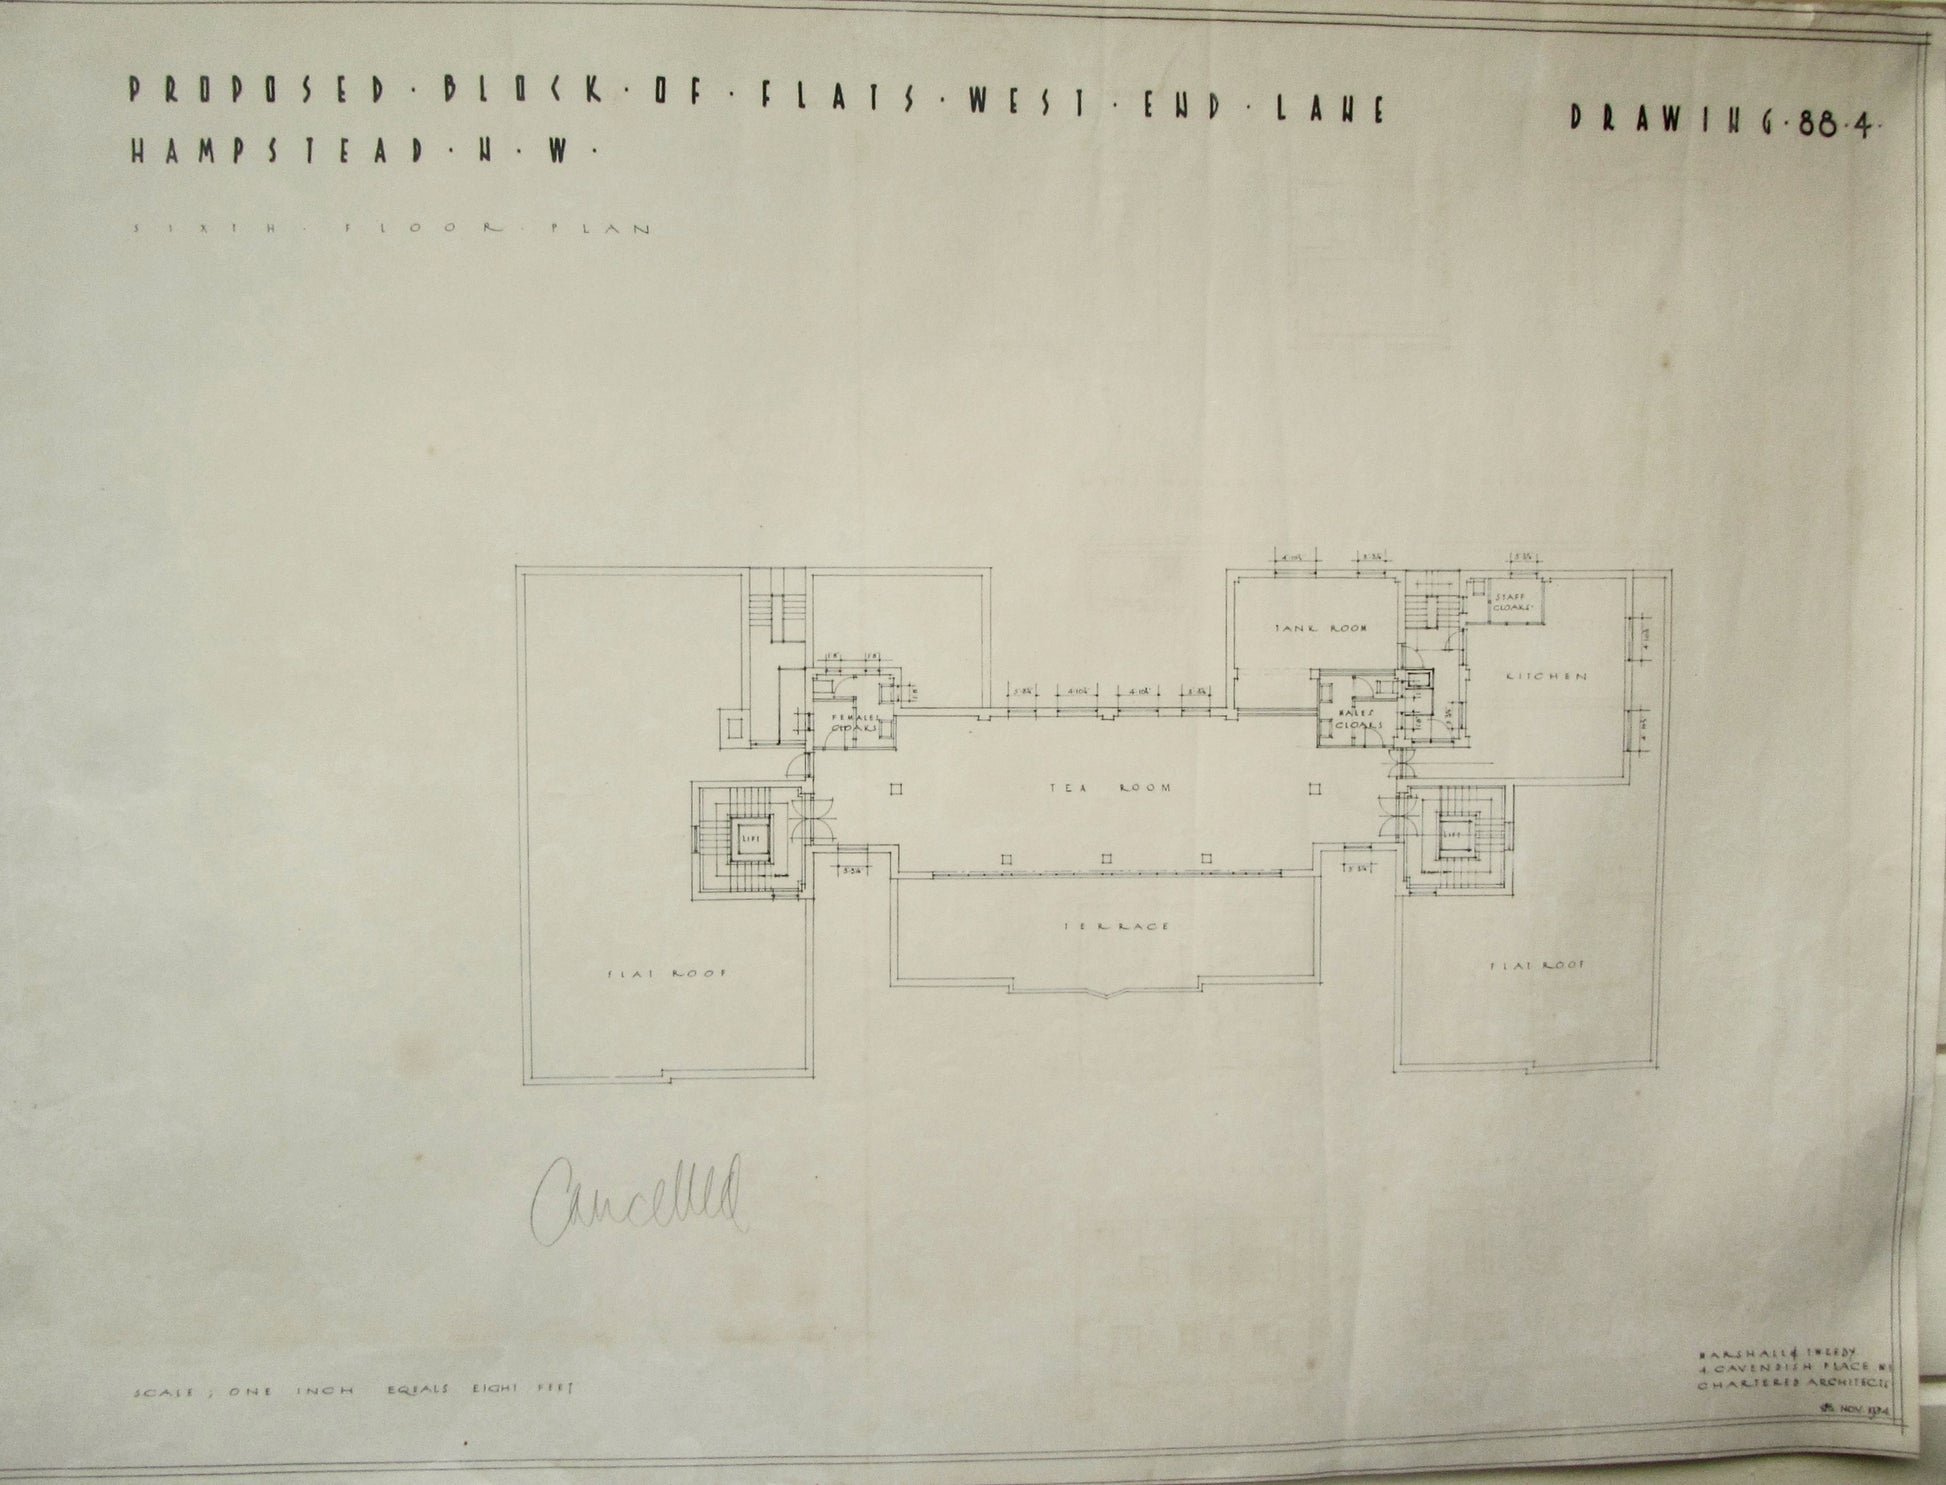 1934 Marshall & Tweedy Architect Drawings West End Lane Hampstead 88.4 Sixth Floor